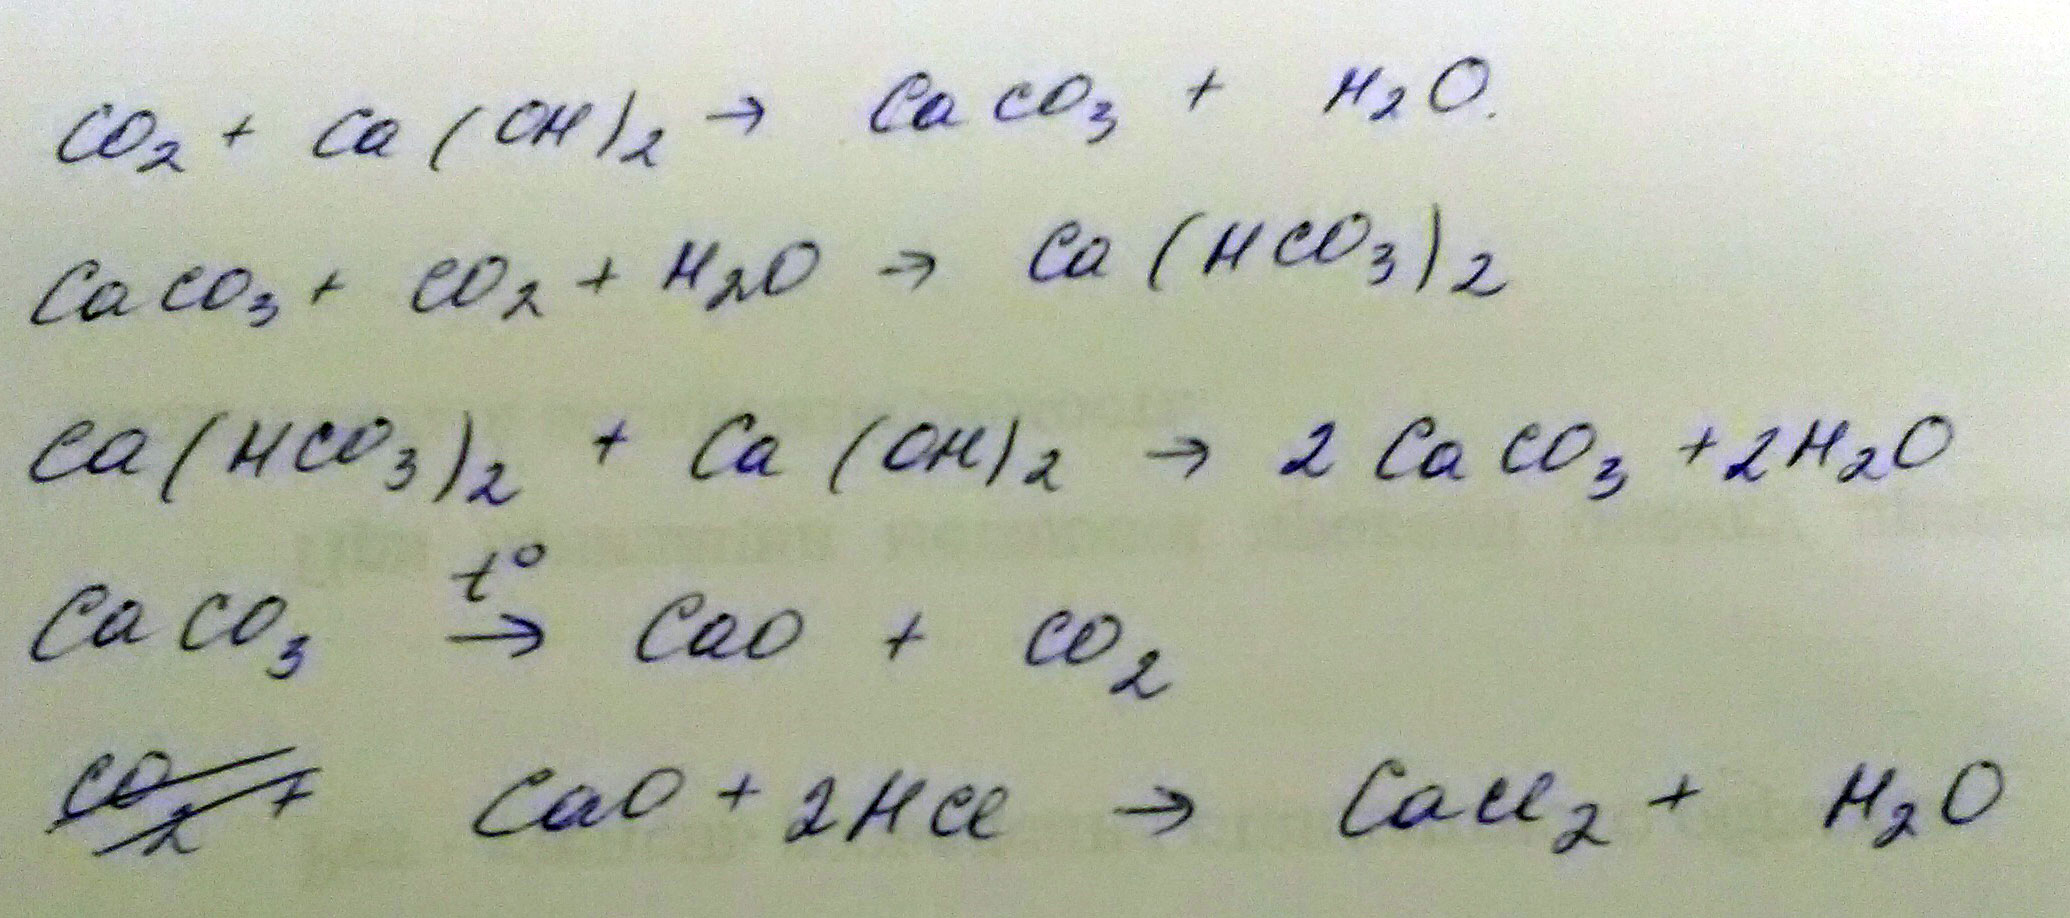 CO2-CaCO3-Ca(HCO3)2-CaCO3-CO2-CaCl2